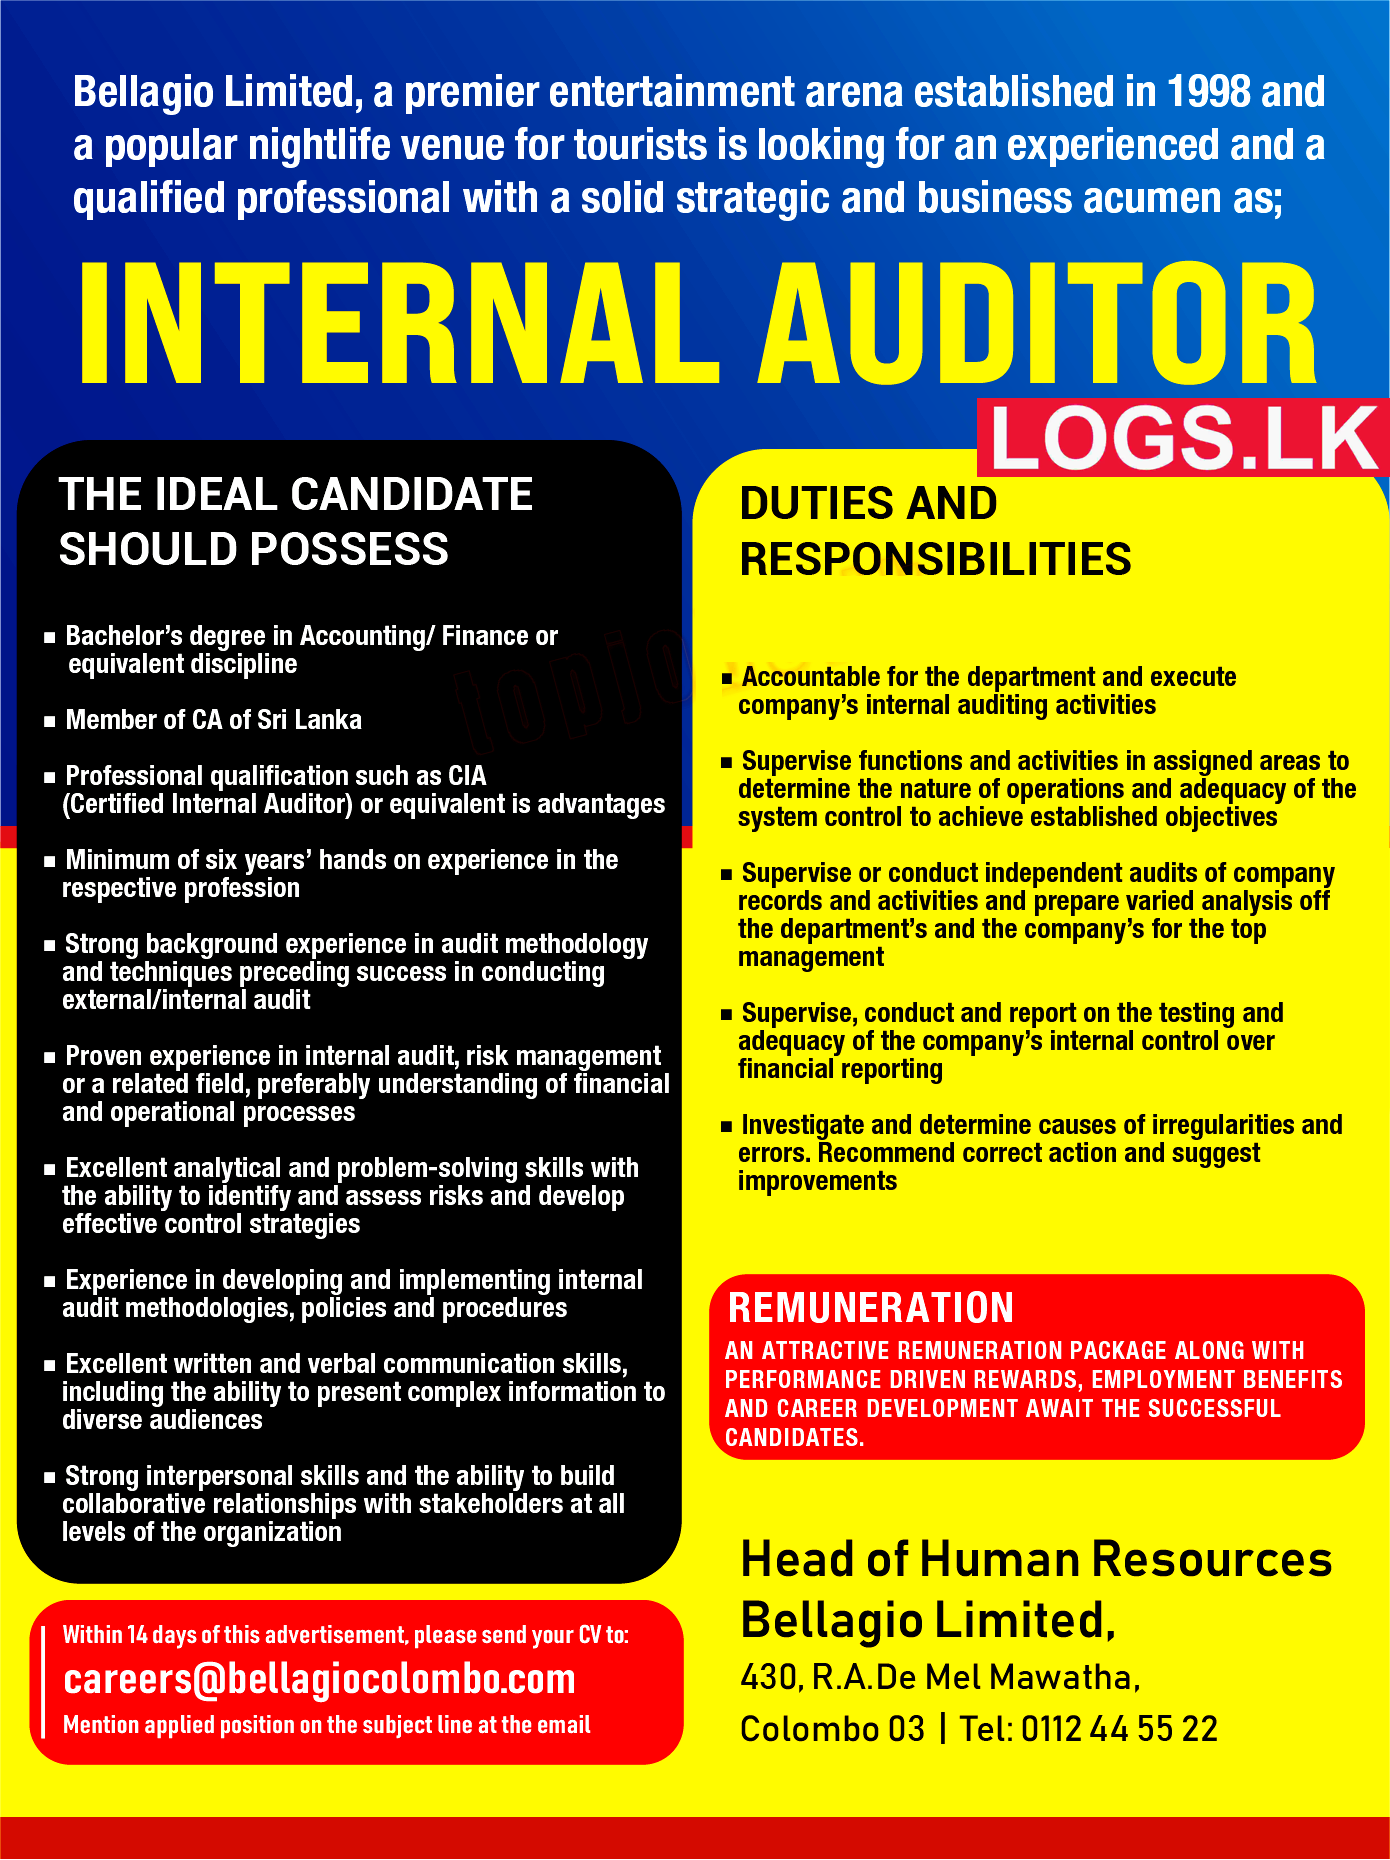 Internal Auditor Job Vacancy at Bellagio Limited Job Vacancies